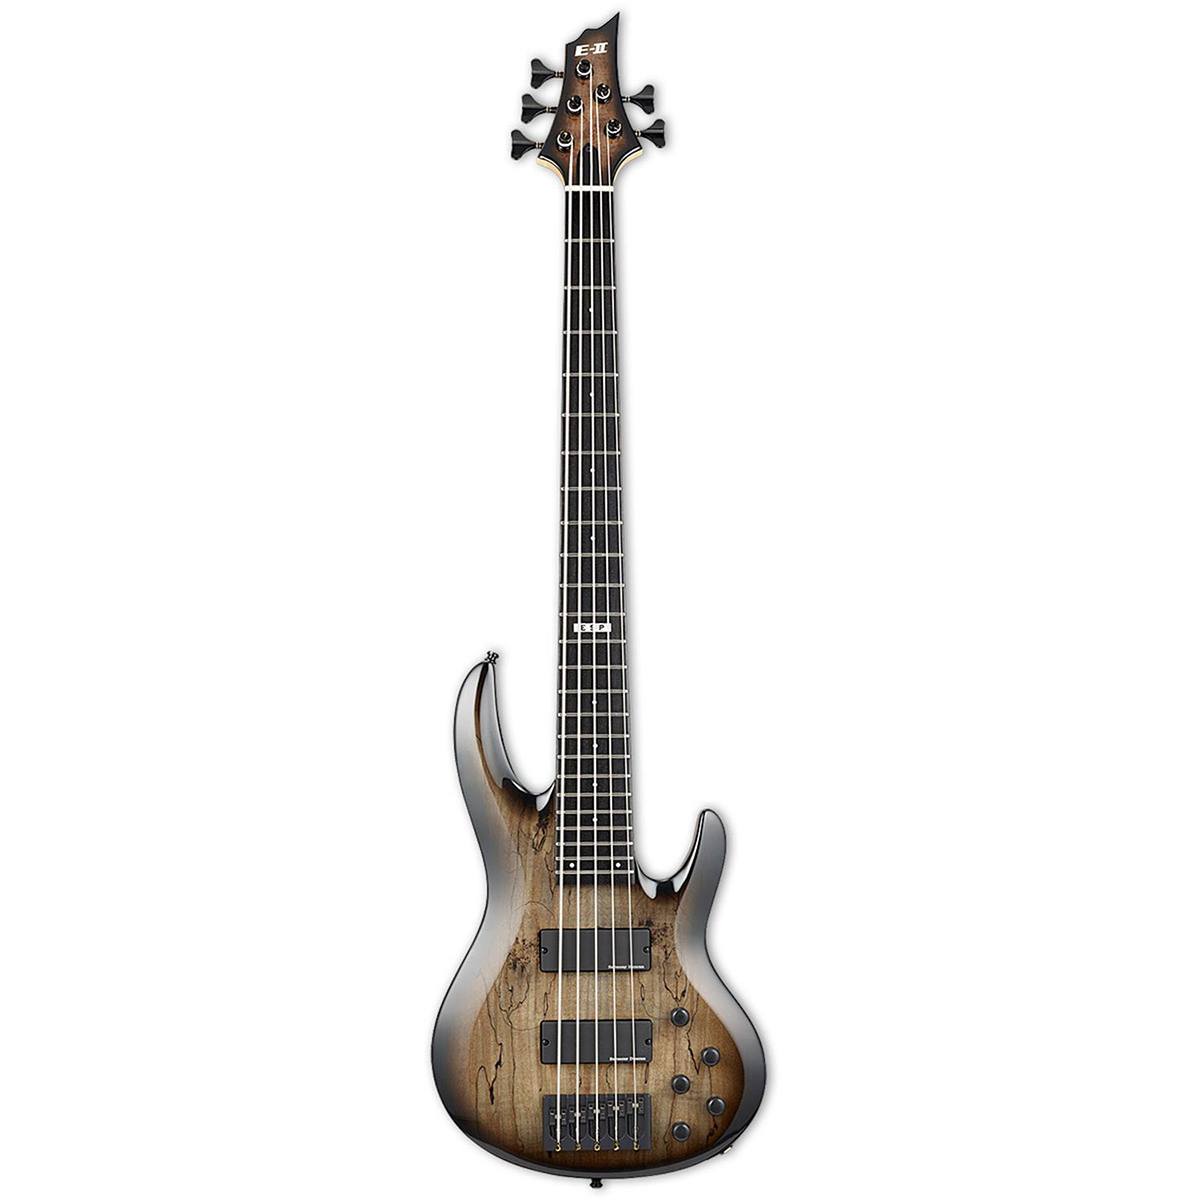 ESP E-II BTL-5 Bass Guitar - Black Natural Burst [Made in Japan]